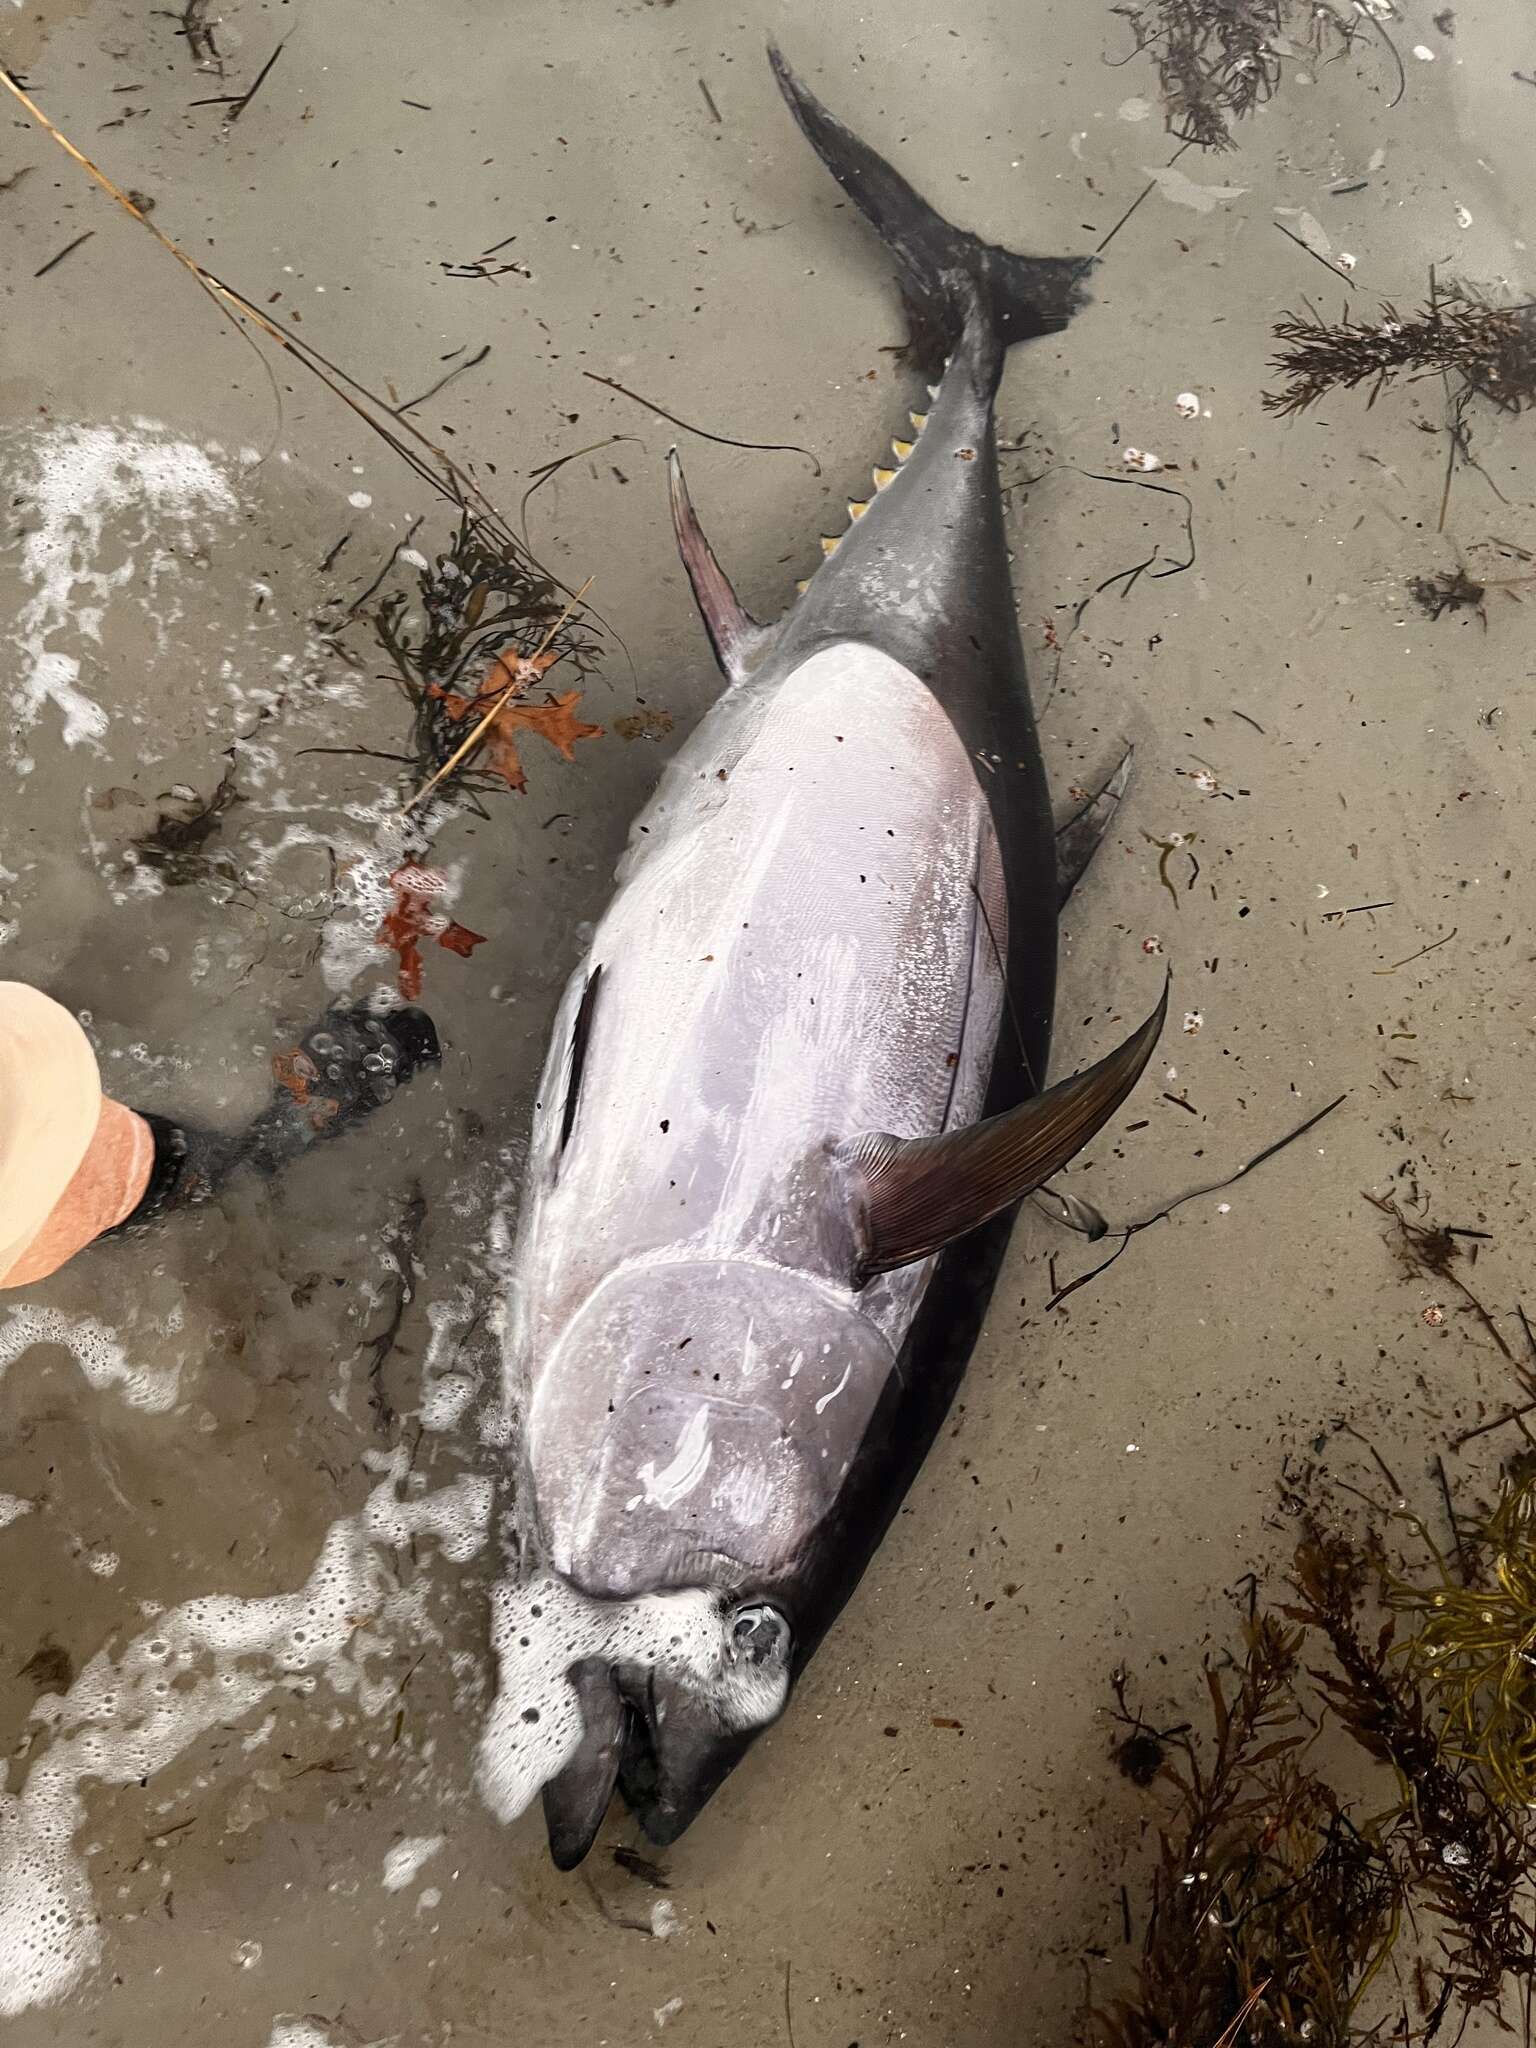 Image of Atlantic Bluefin Tuna